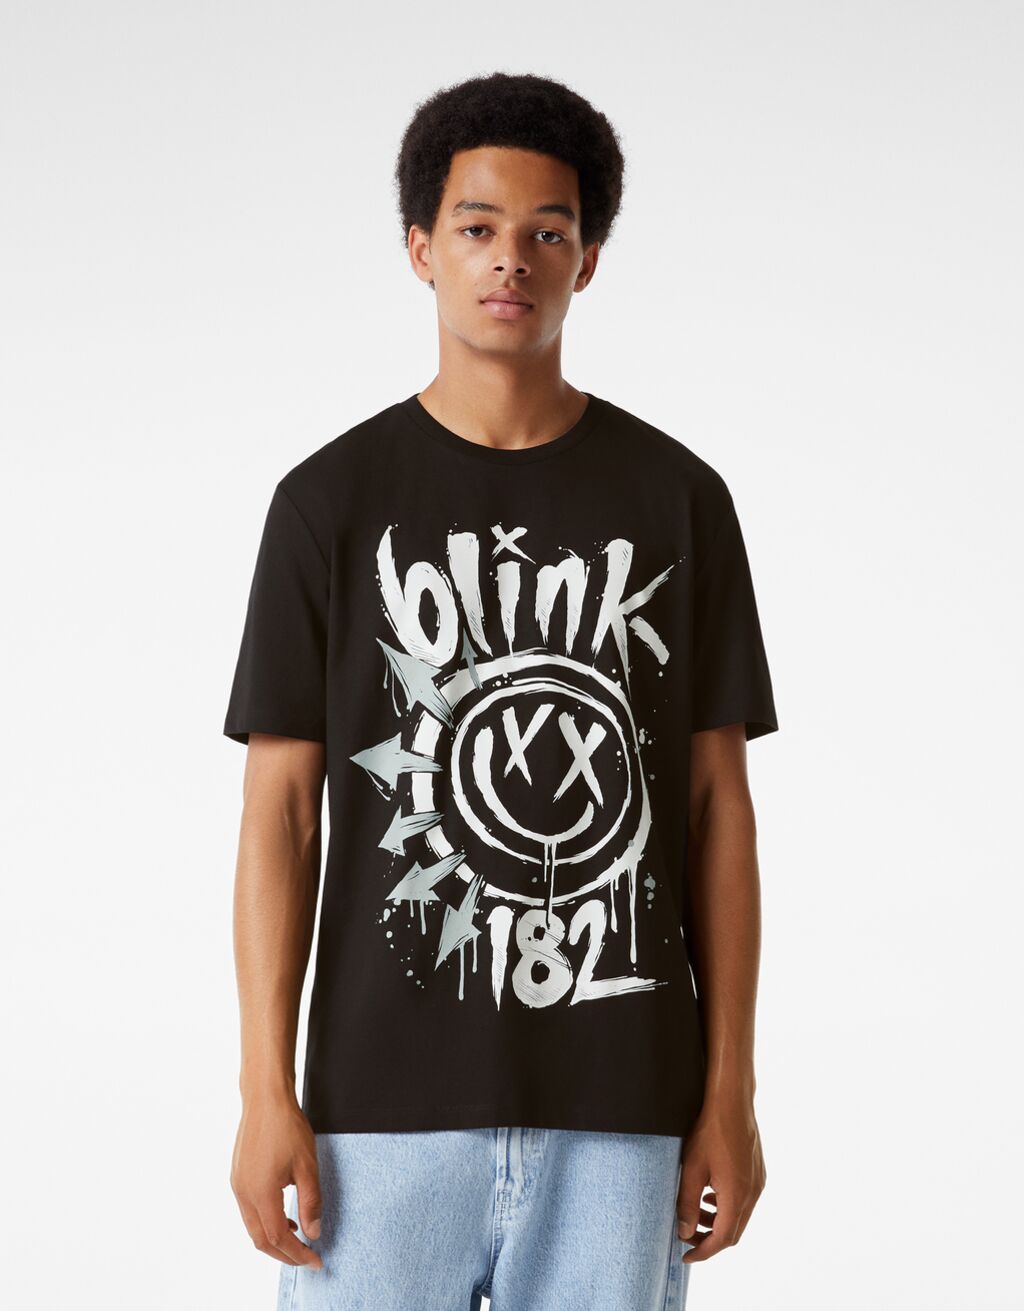 Camiseta manga curta regular fit estampado Blink 182